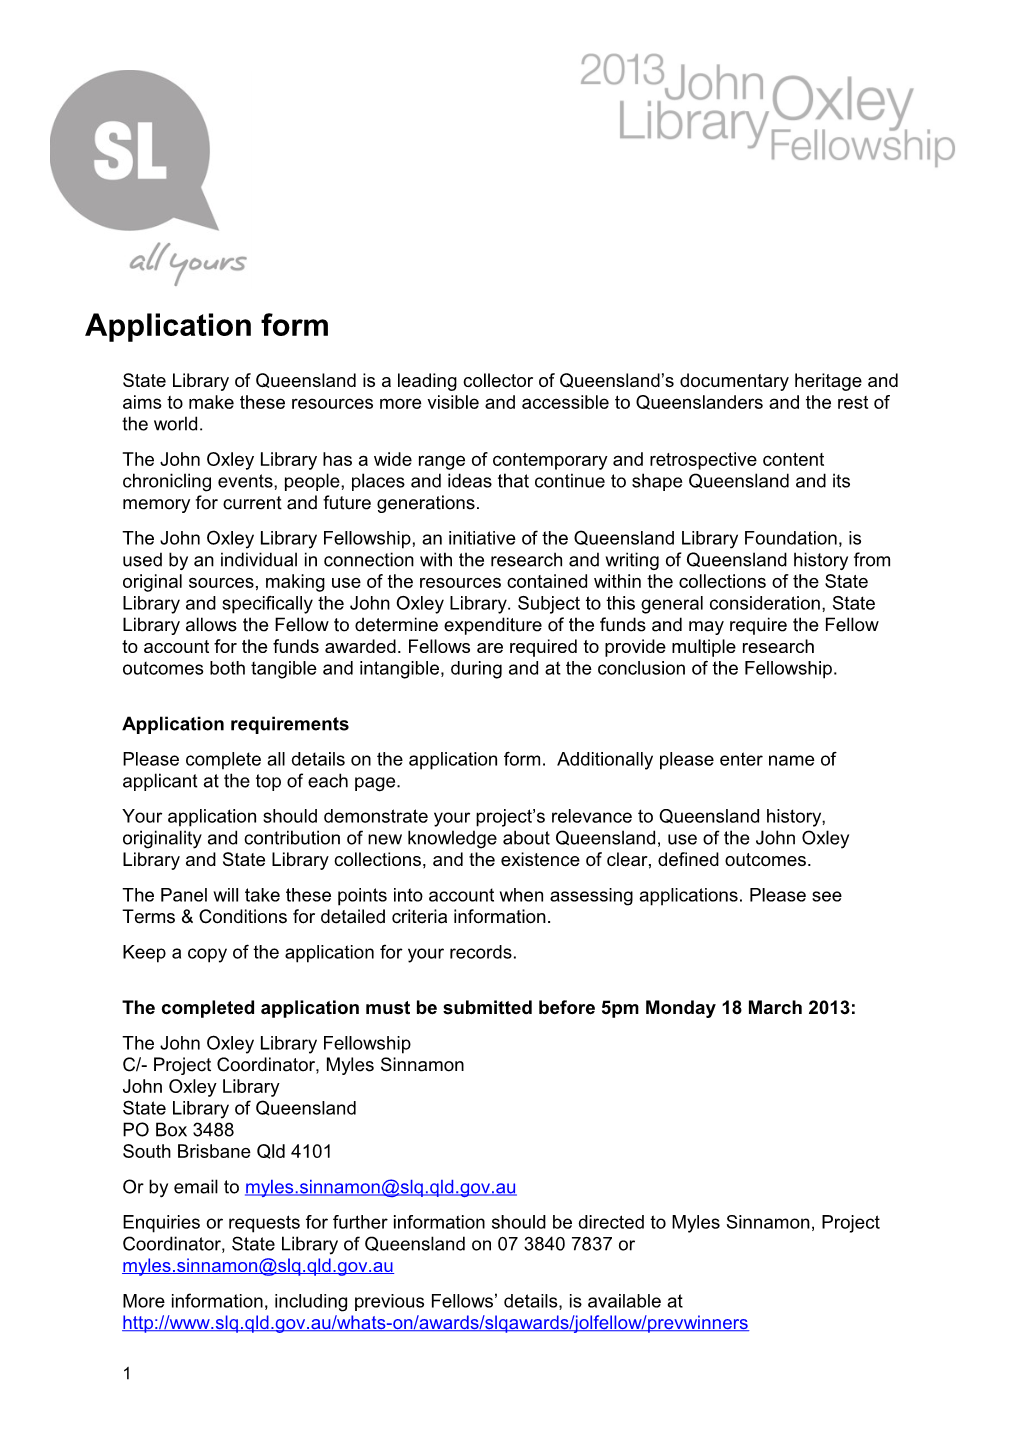 2013 JOL Fellowship Application Form